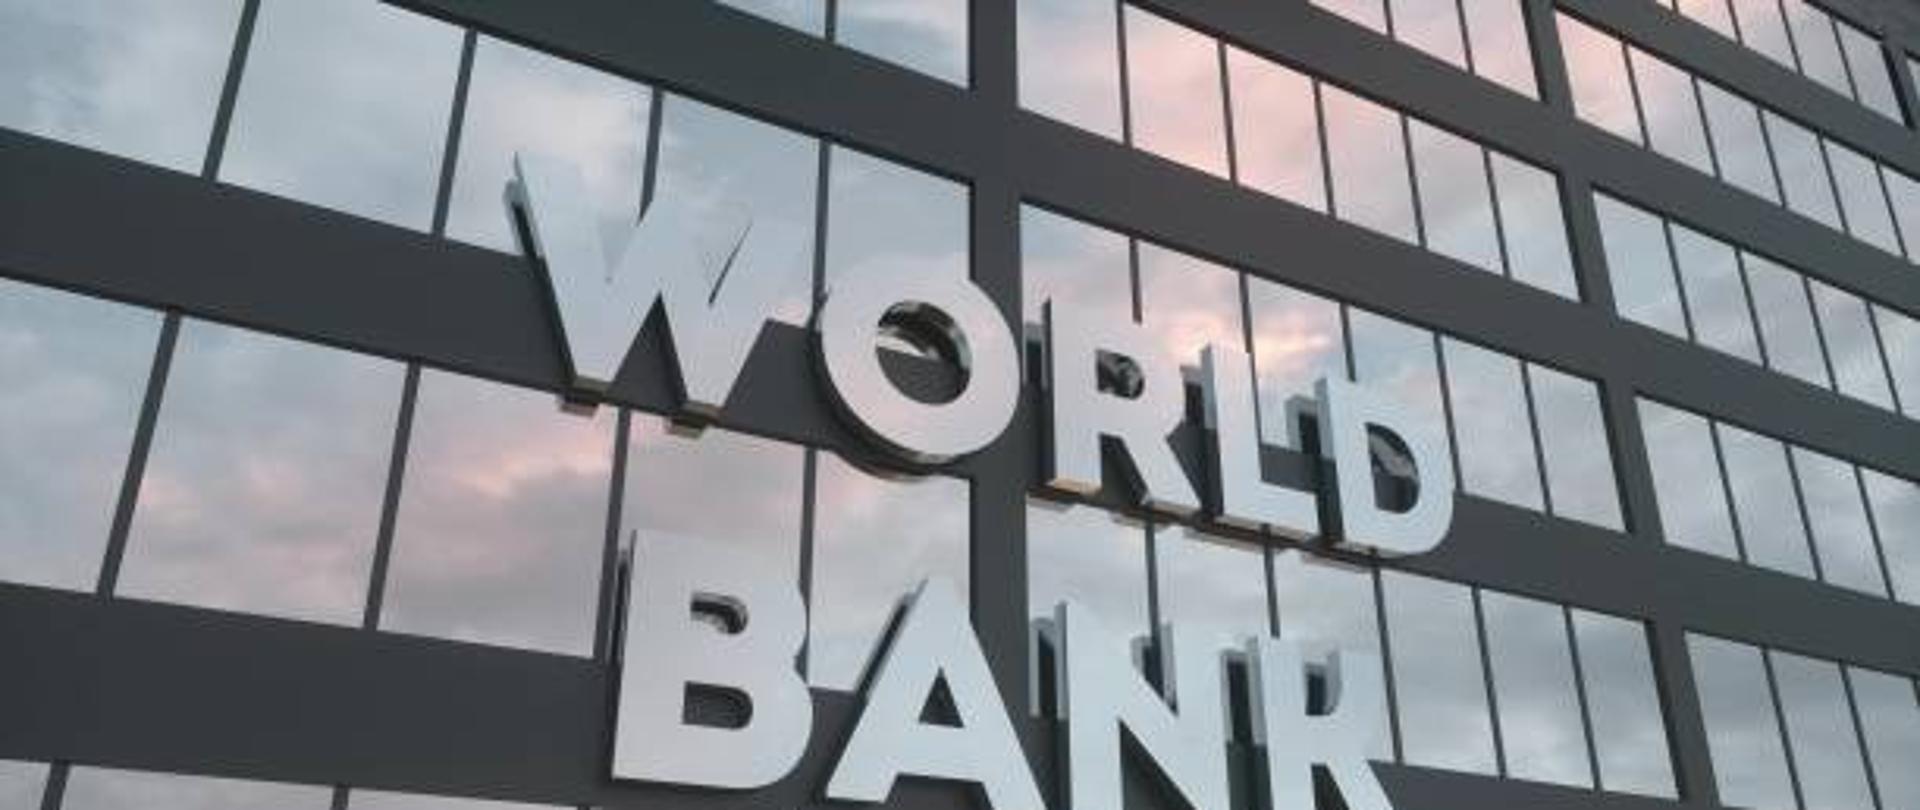 World Bank sign on a modern glass skyscraper. World Bank glass building. 3d rendering.